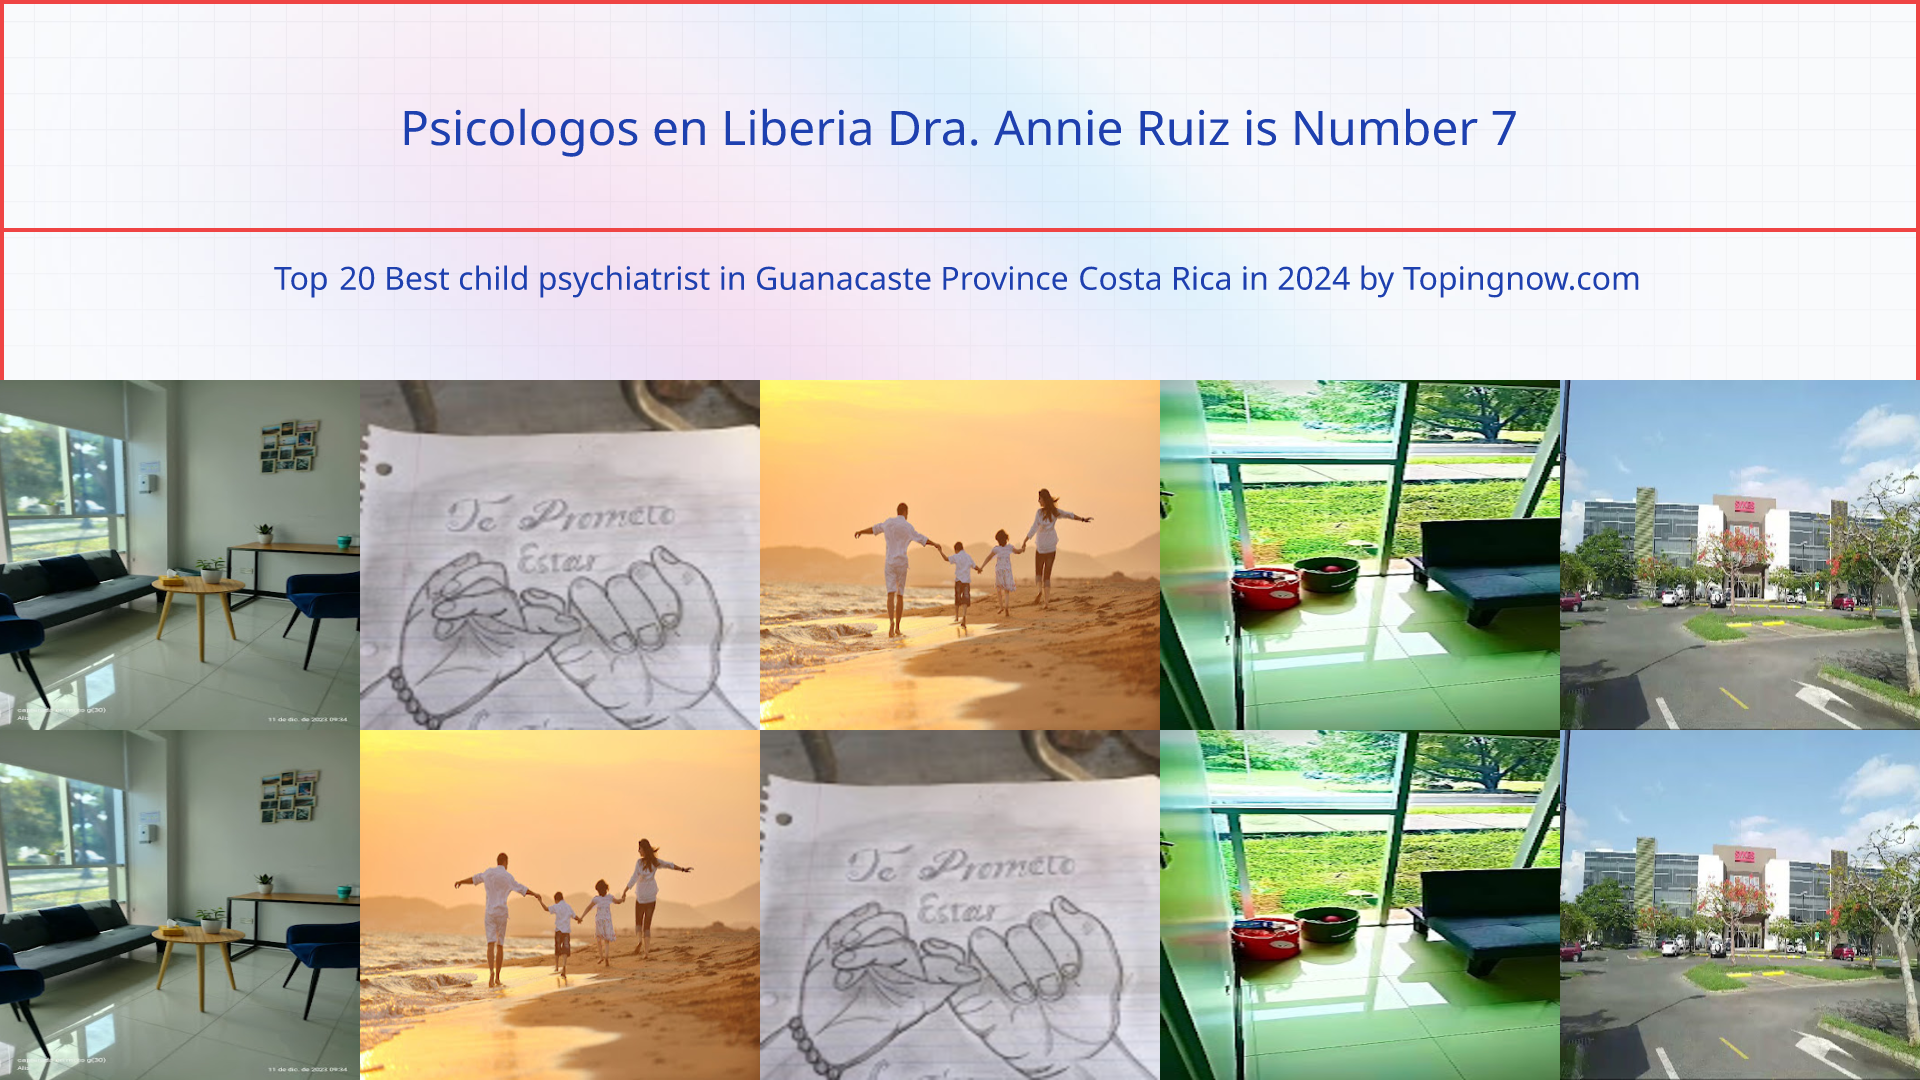 Psicologos en Liberia Dra. Annie Ruiz: Top 20 Best child psychiatrist in Guanacaste Province Costa Rica in 2024